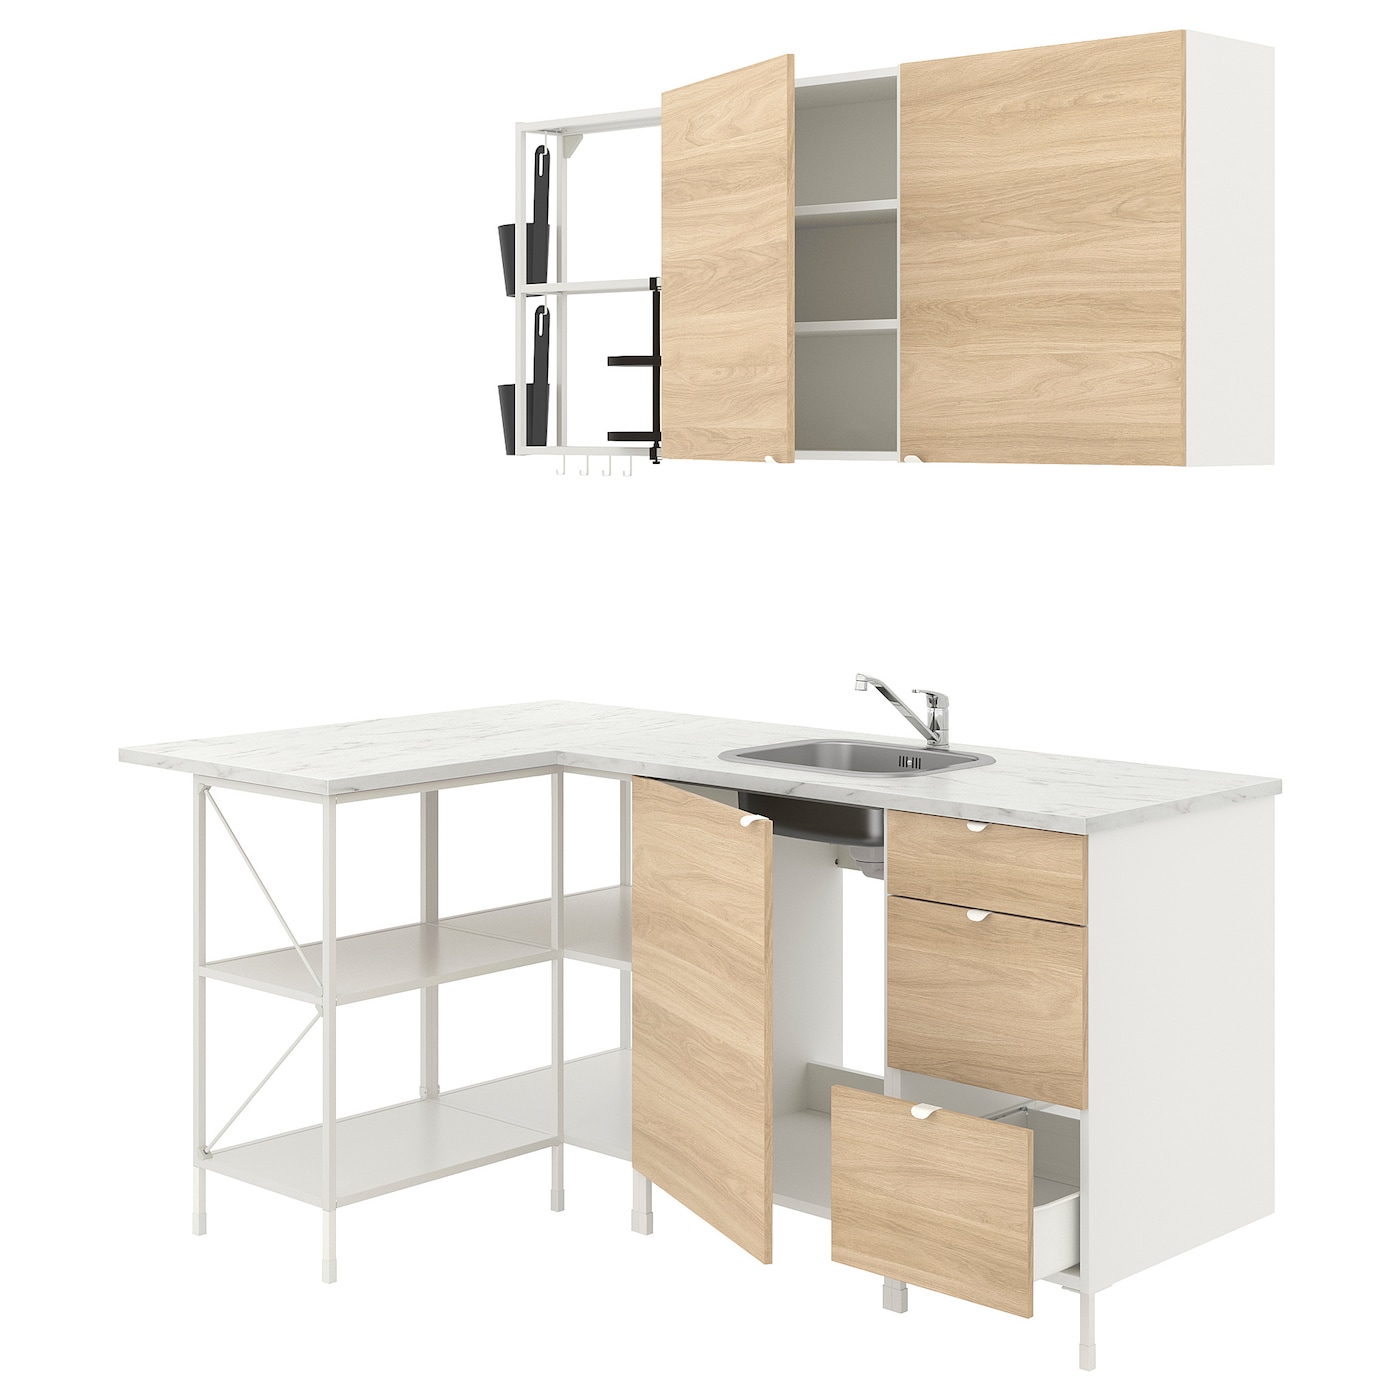 Угловая кухонная комбинация для хранения - ENHET  IKEA/ ЭНХЕТ ИКЕА, 121,5х185х75 см, белый/бежевый